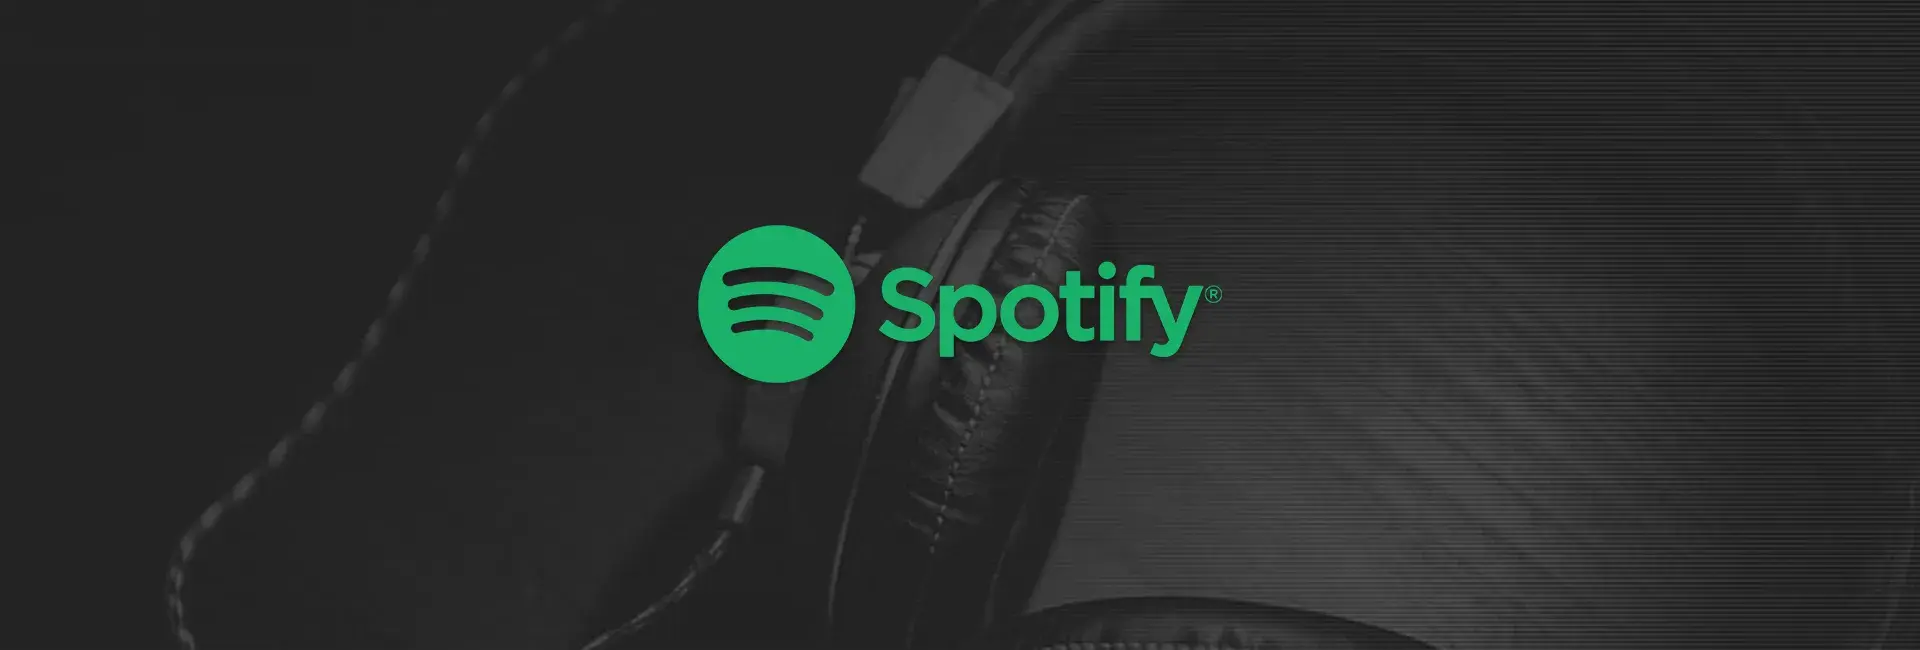 Spotify Premium (DK)